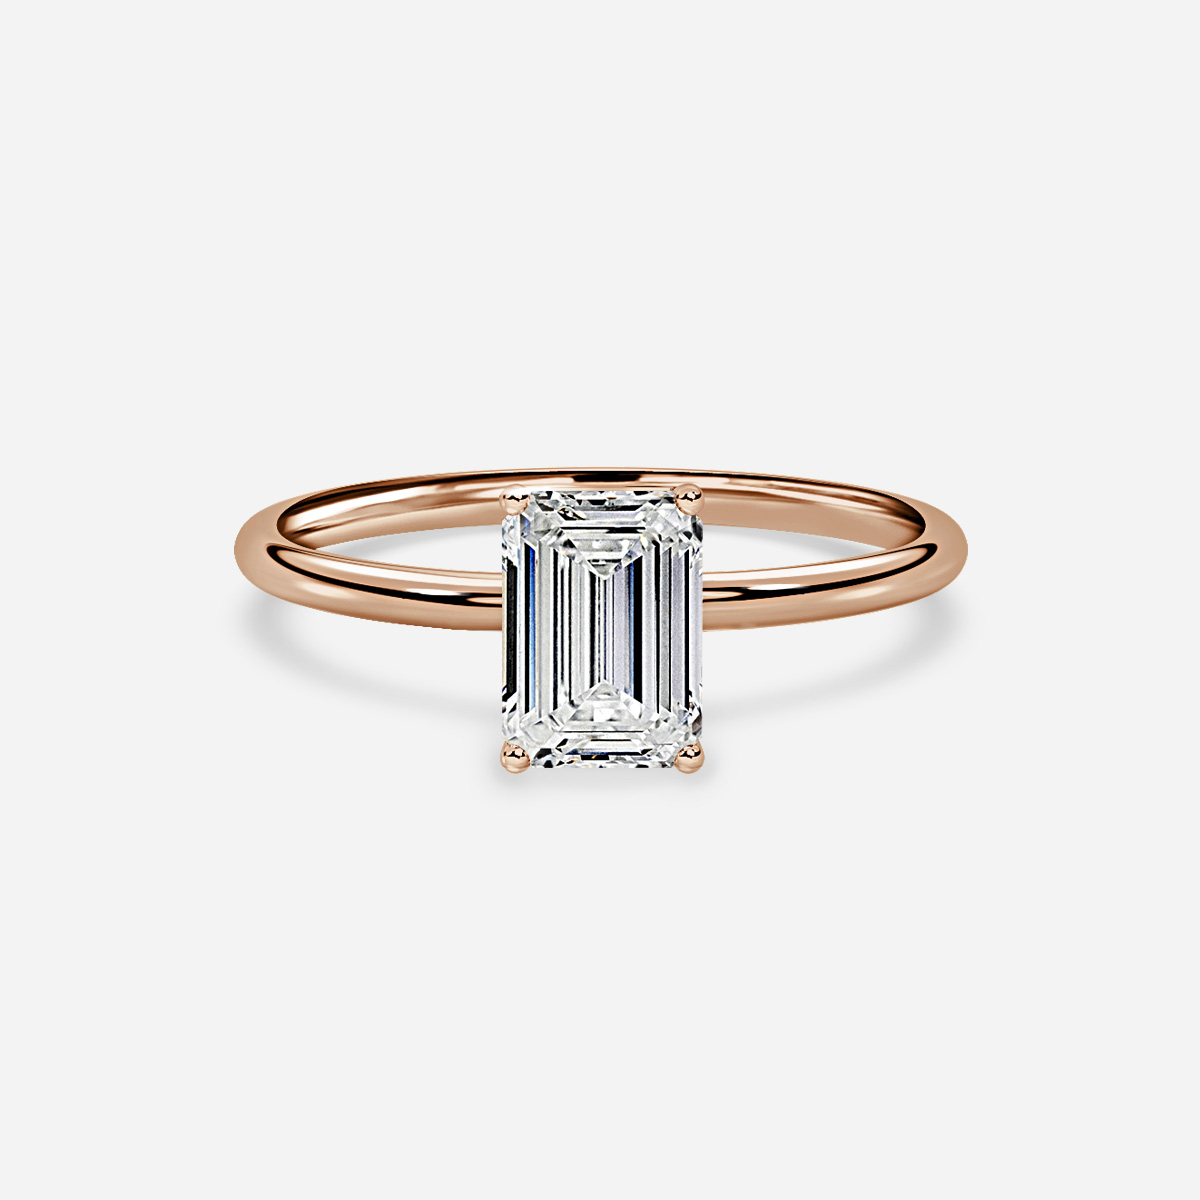 Chelsea Rose Gold Engagement Ring